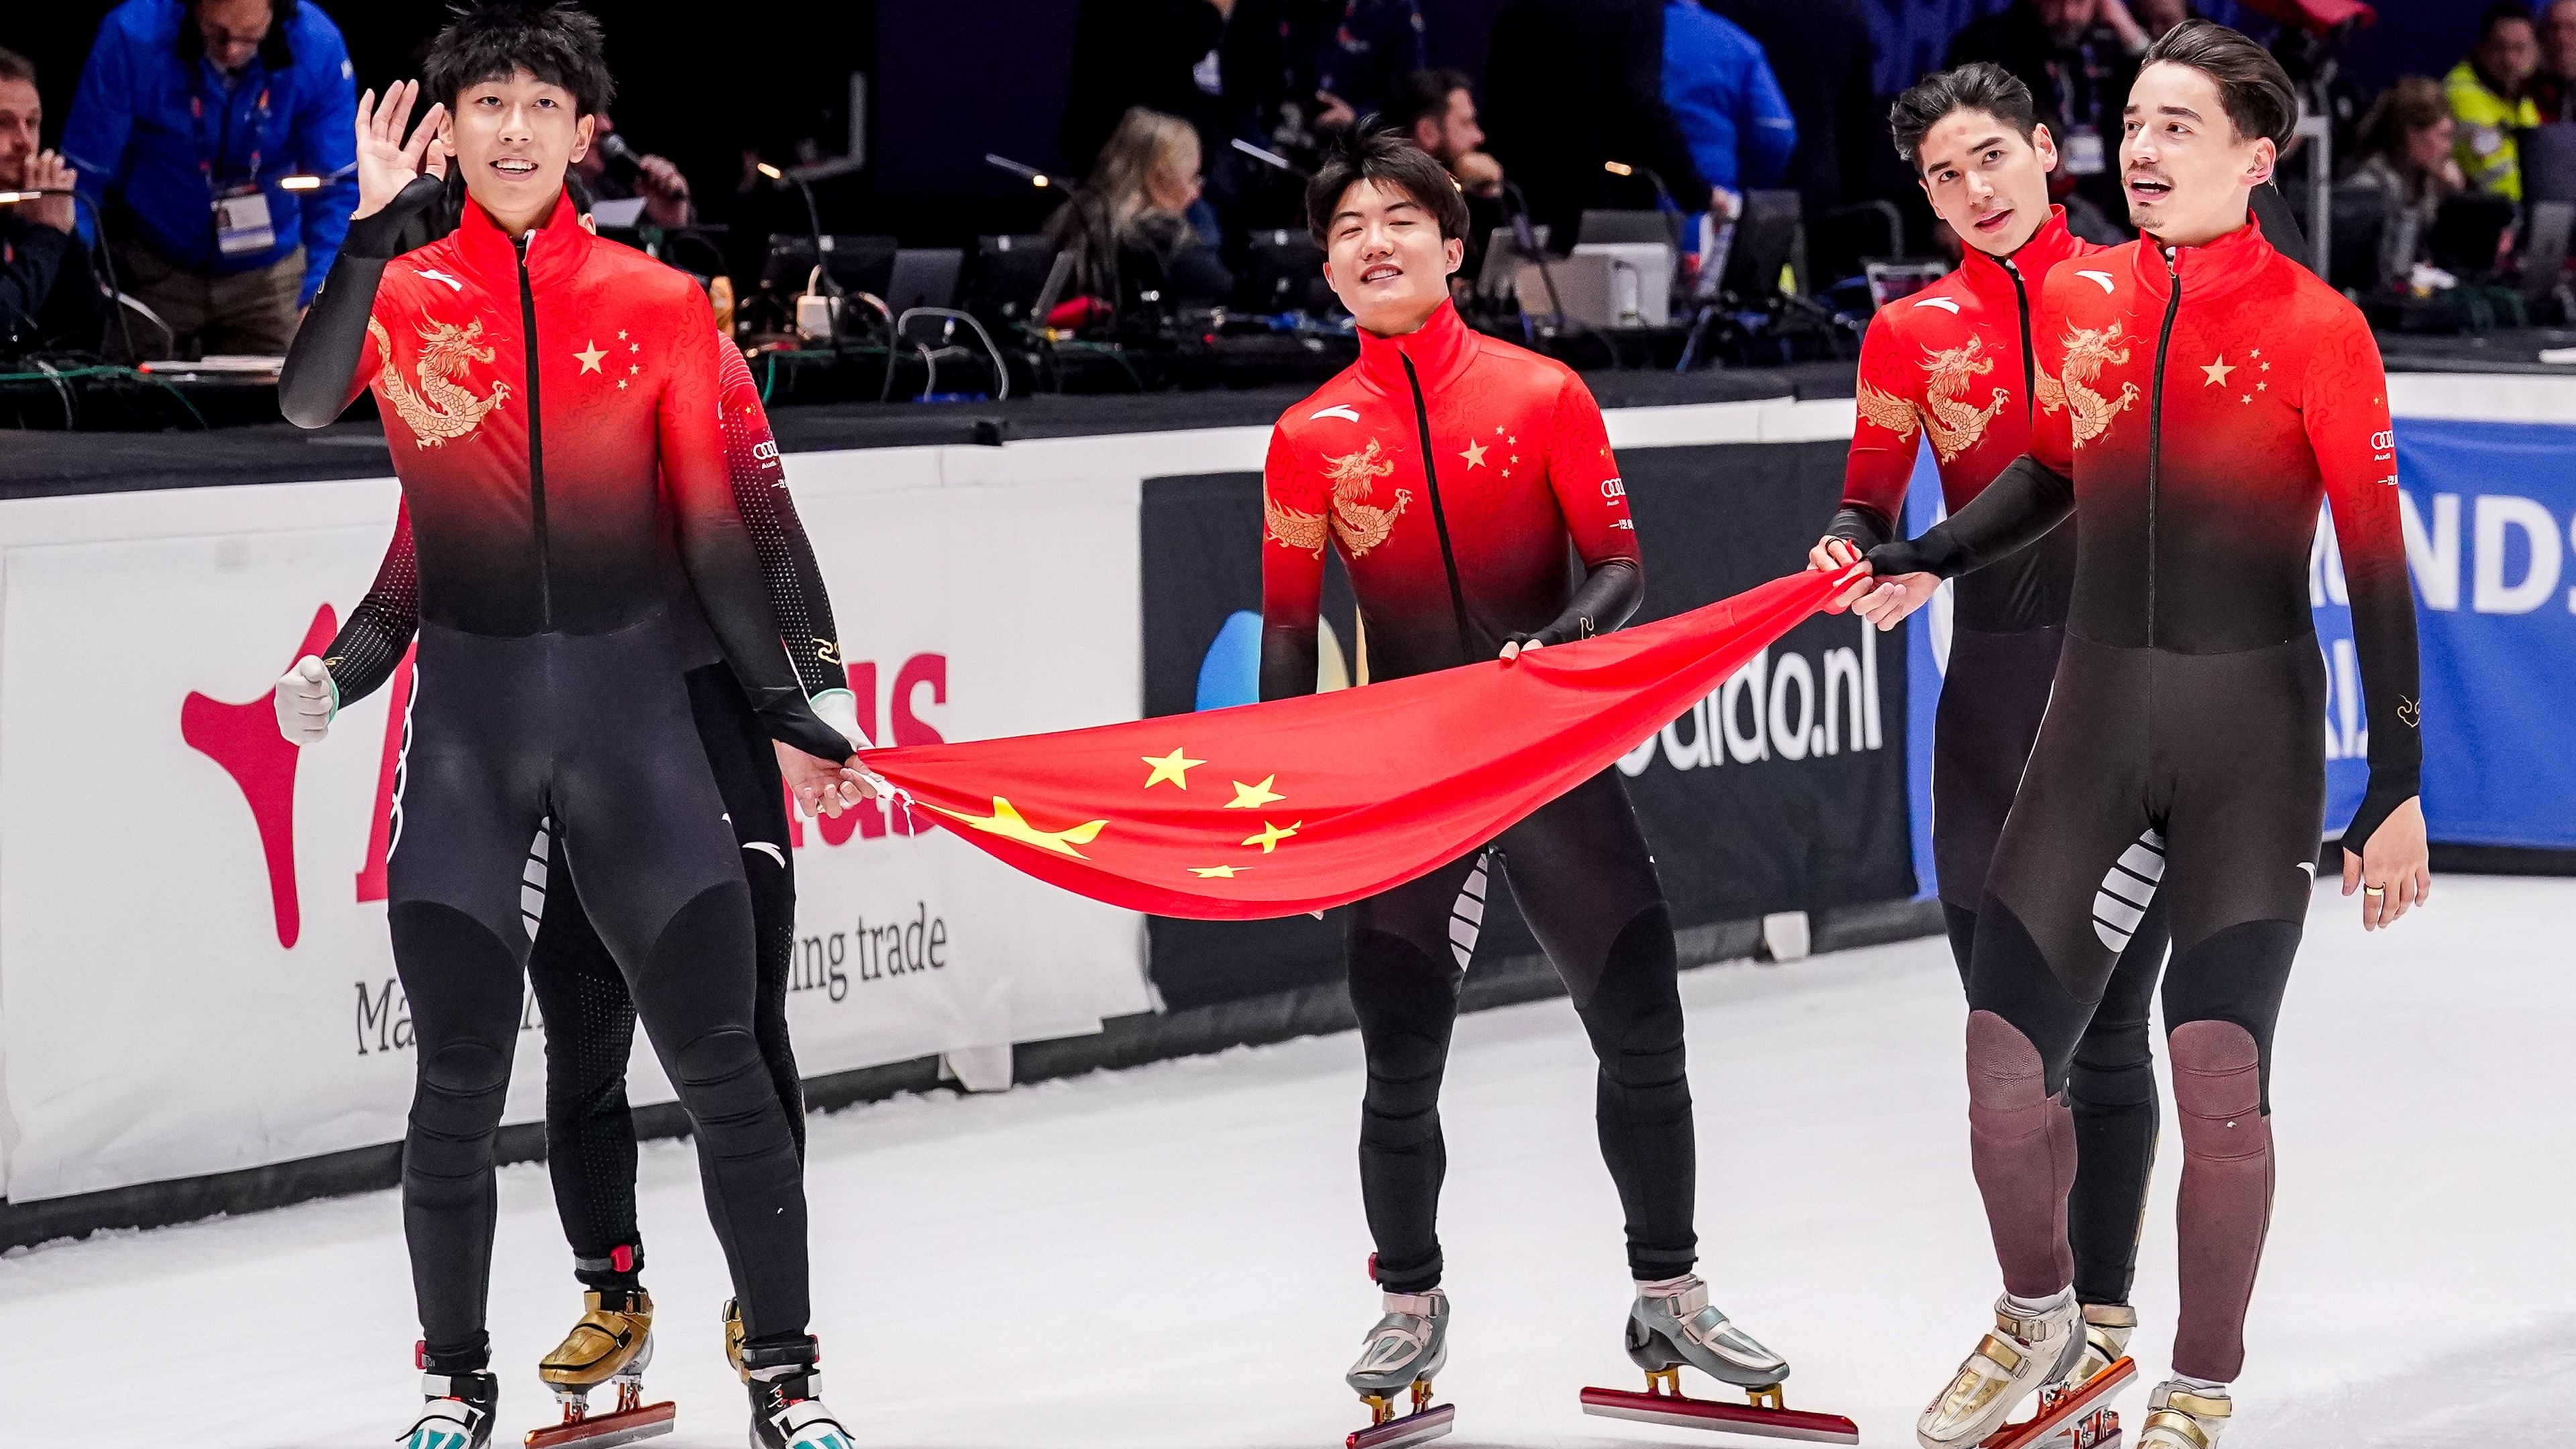 A Liu testvérek a kínai zászlóval